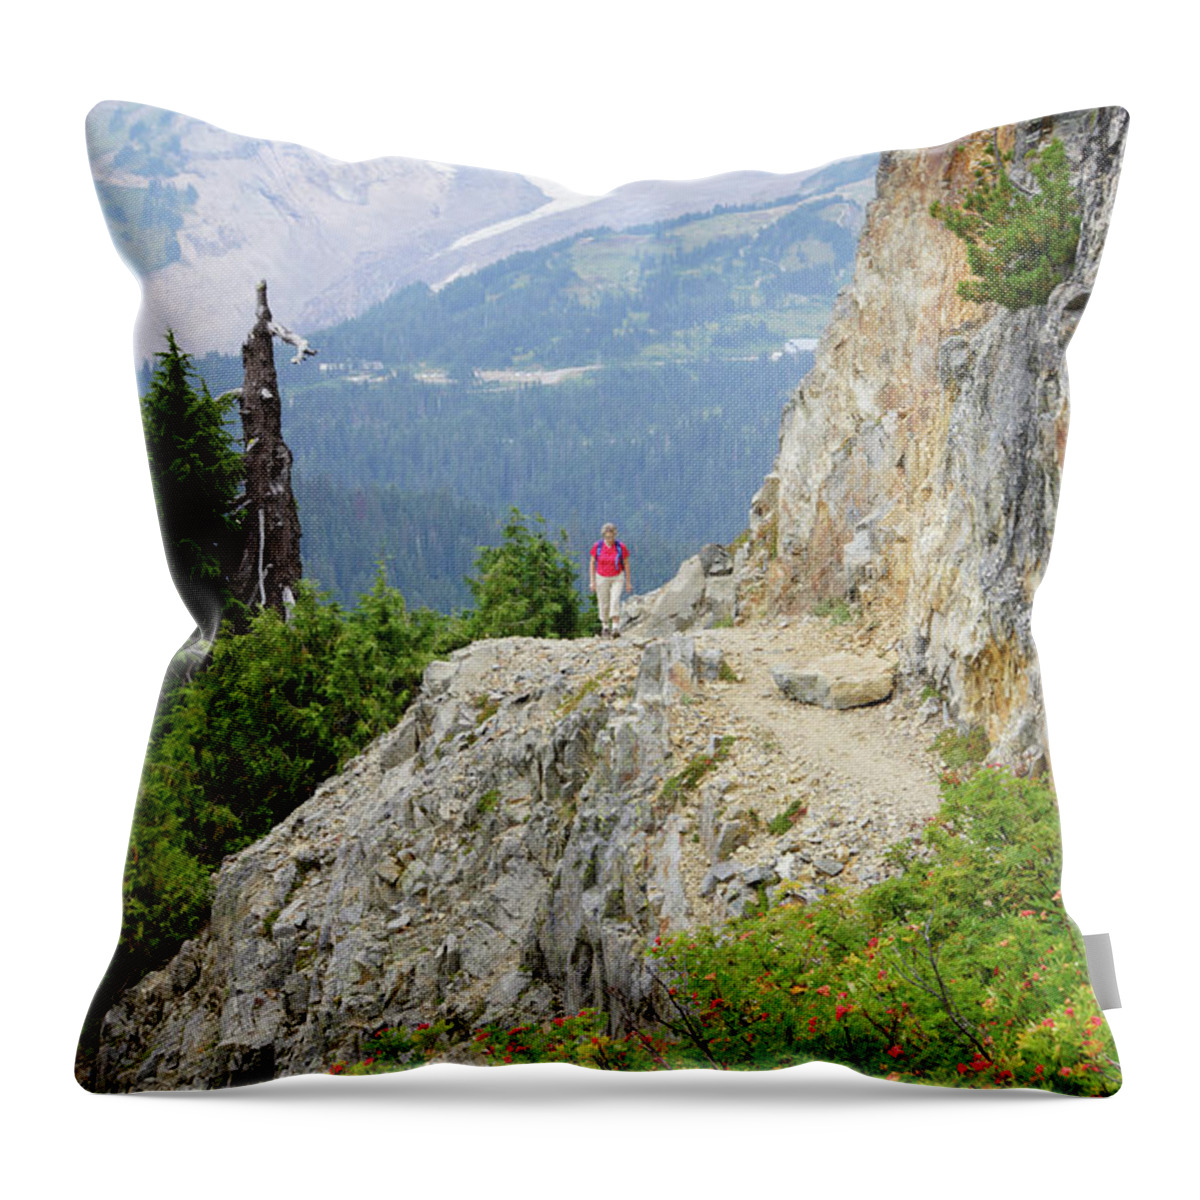 Mrnp Throw Pillow featuring the photograph Hiker on steep trail near Pinnacle Pass, Mount Rainier by Steve Estvanik